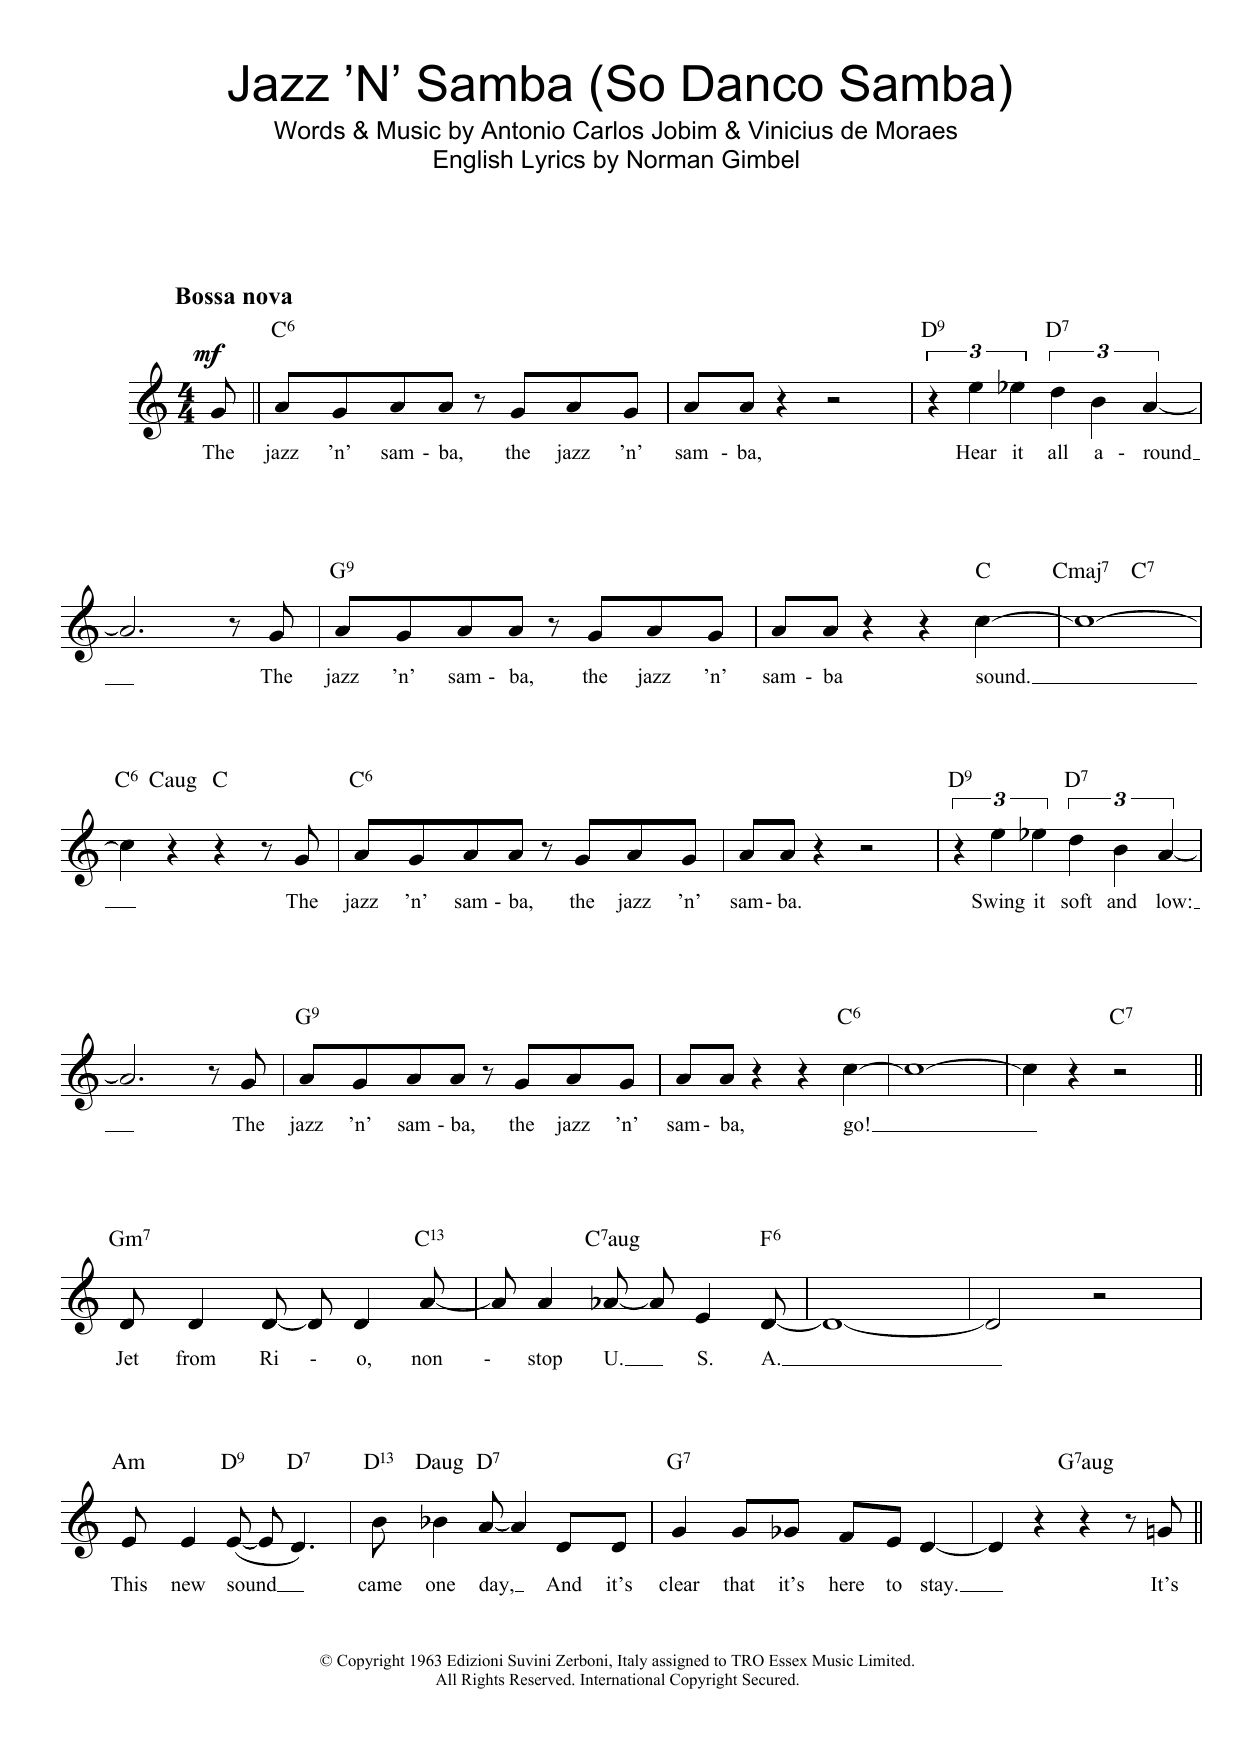 Download Antonio Carlos Jobim Jazz 'n' Samba Sheet Music and learn how to play Melody Line, Lyrics & Chords PDF digital score in minutes